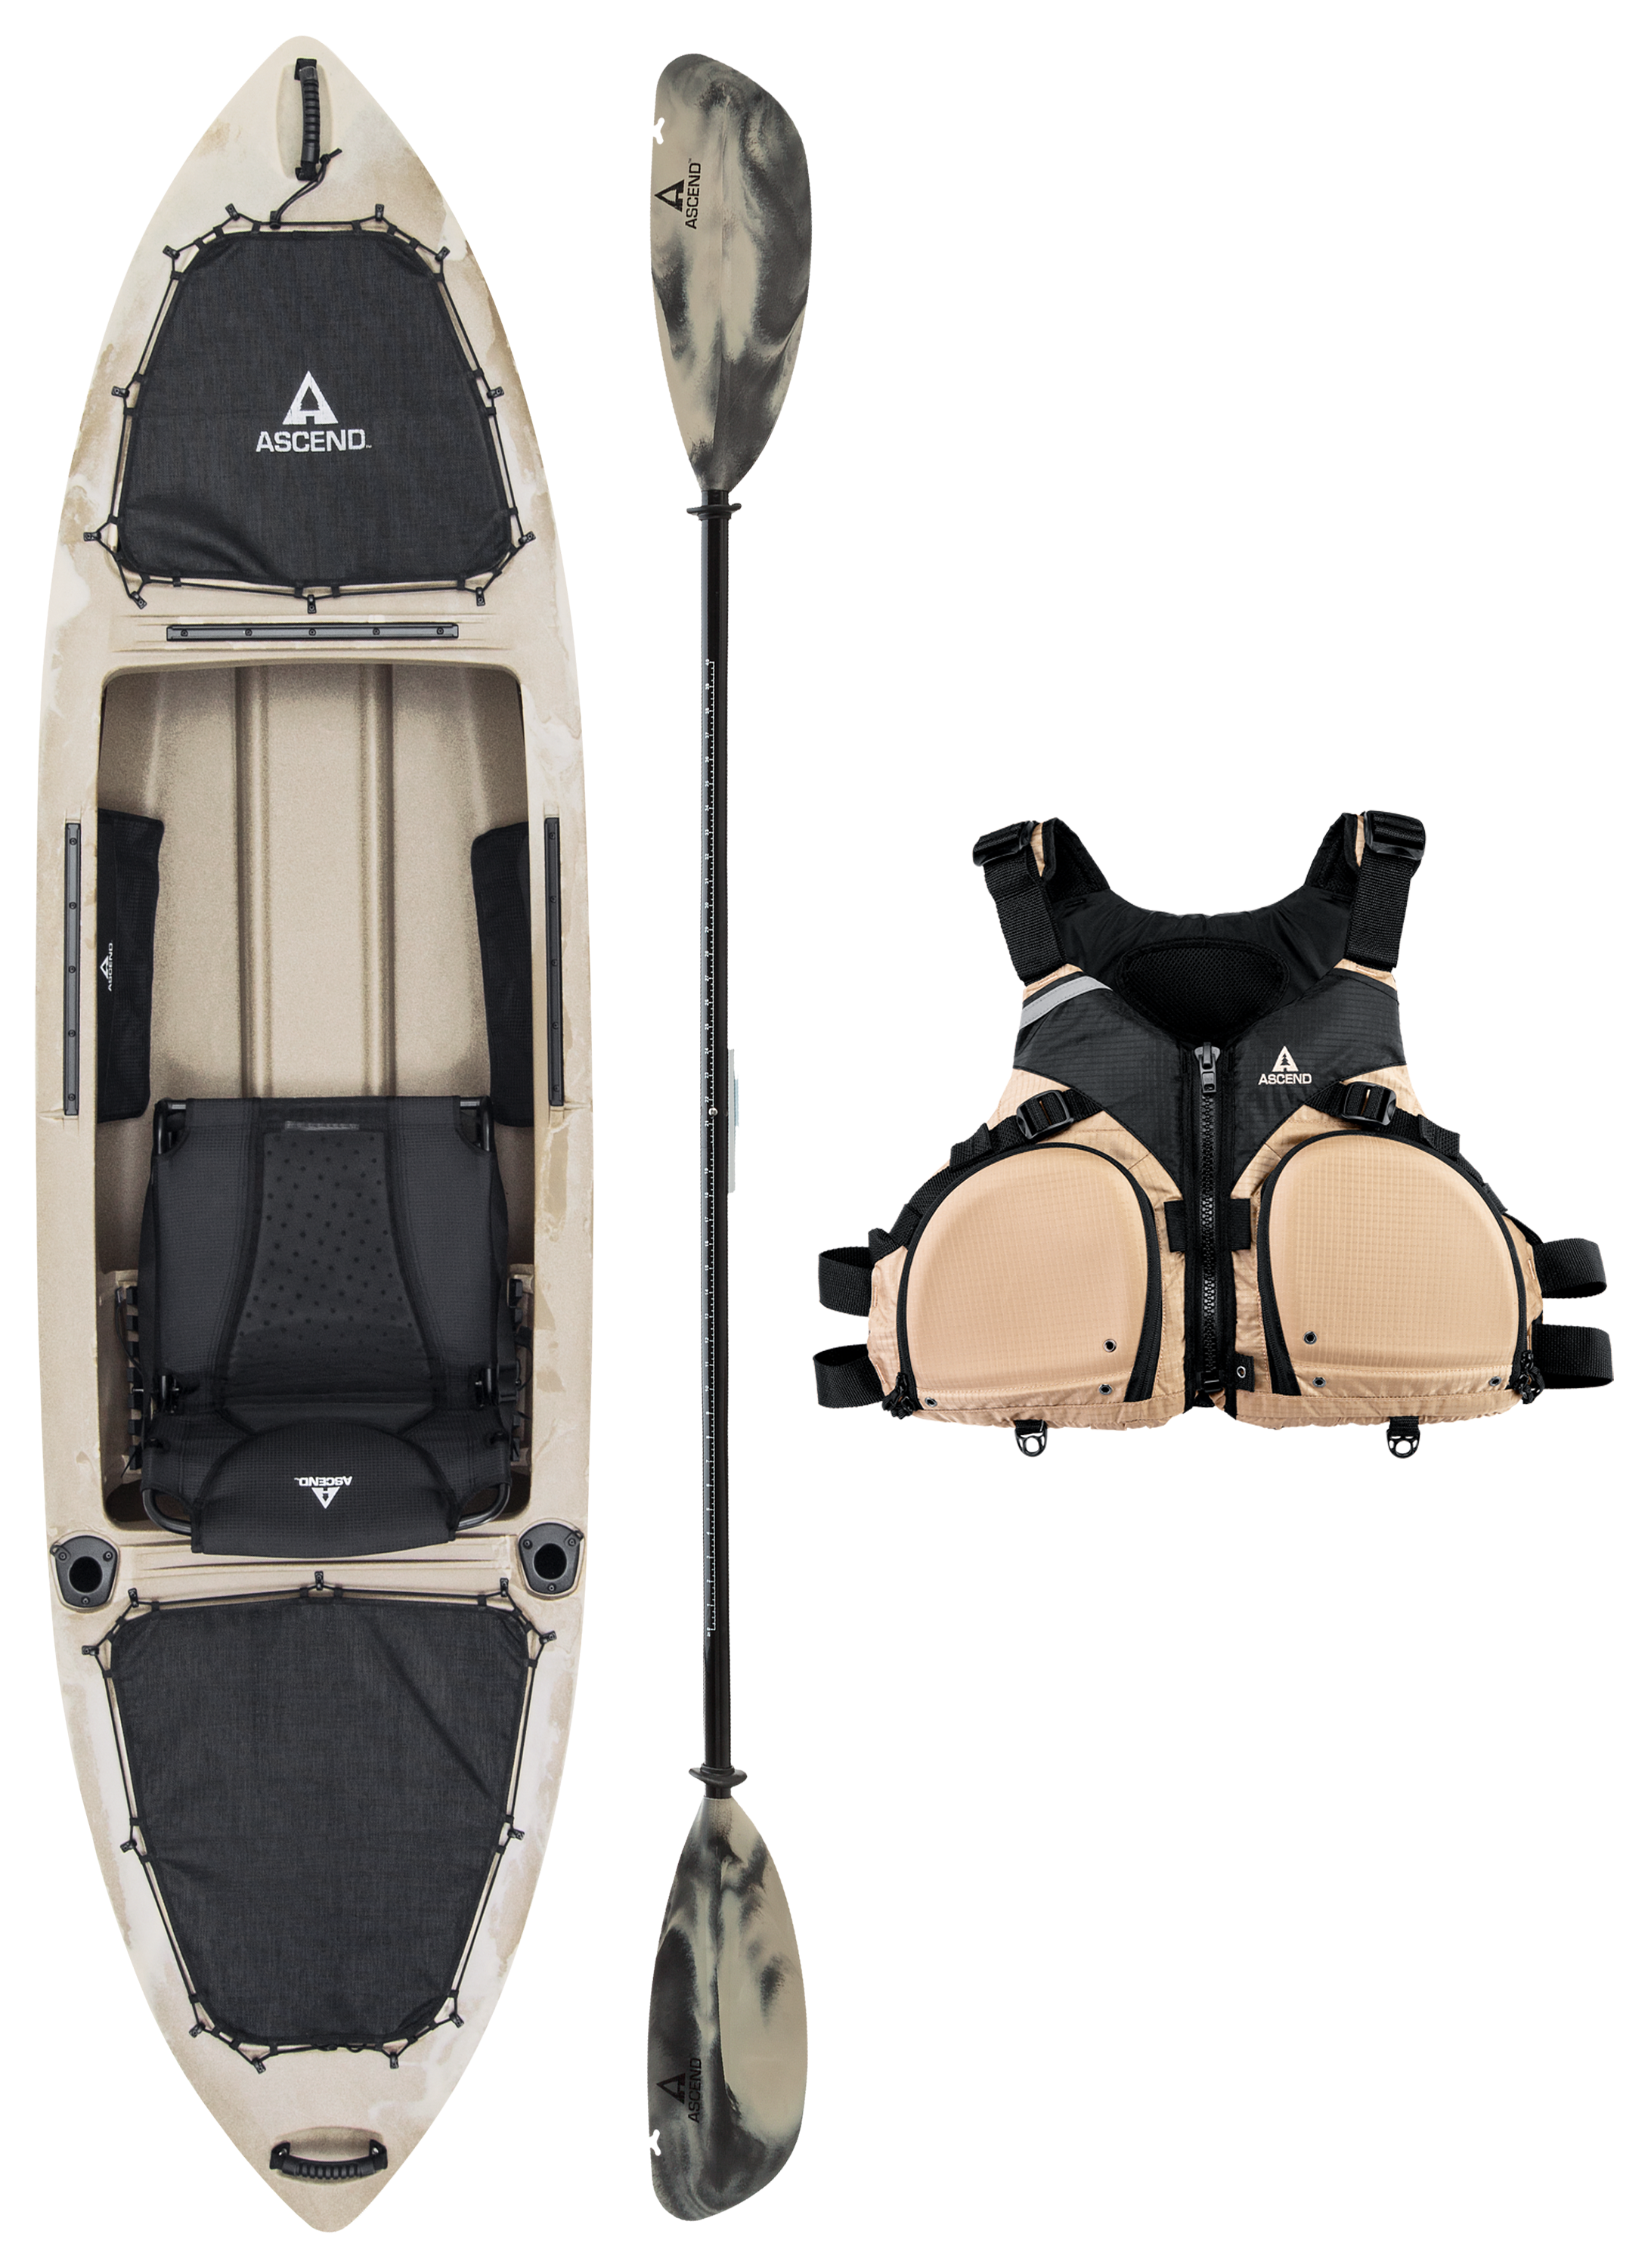 Ascend H10 Desert Storm Sit-In Hybrid Kayak Fishing Package